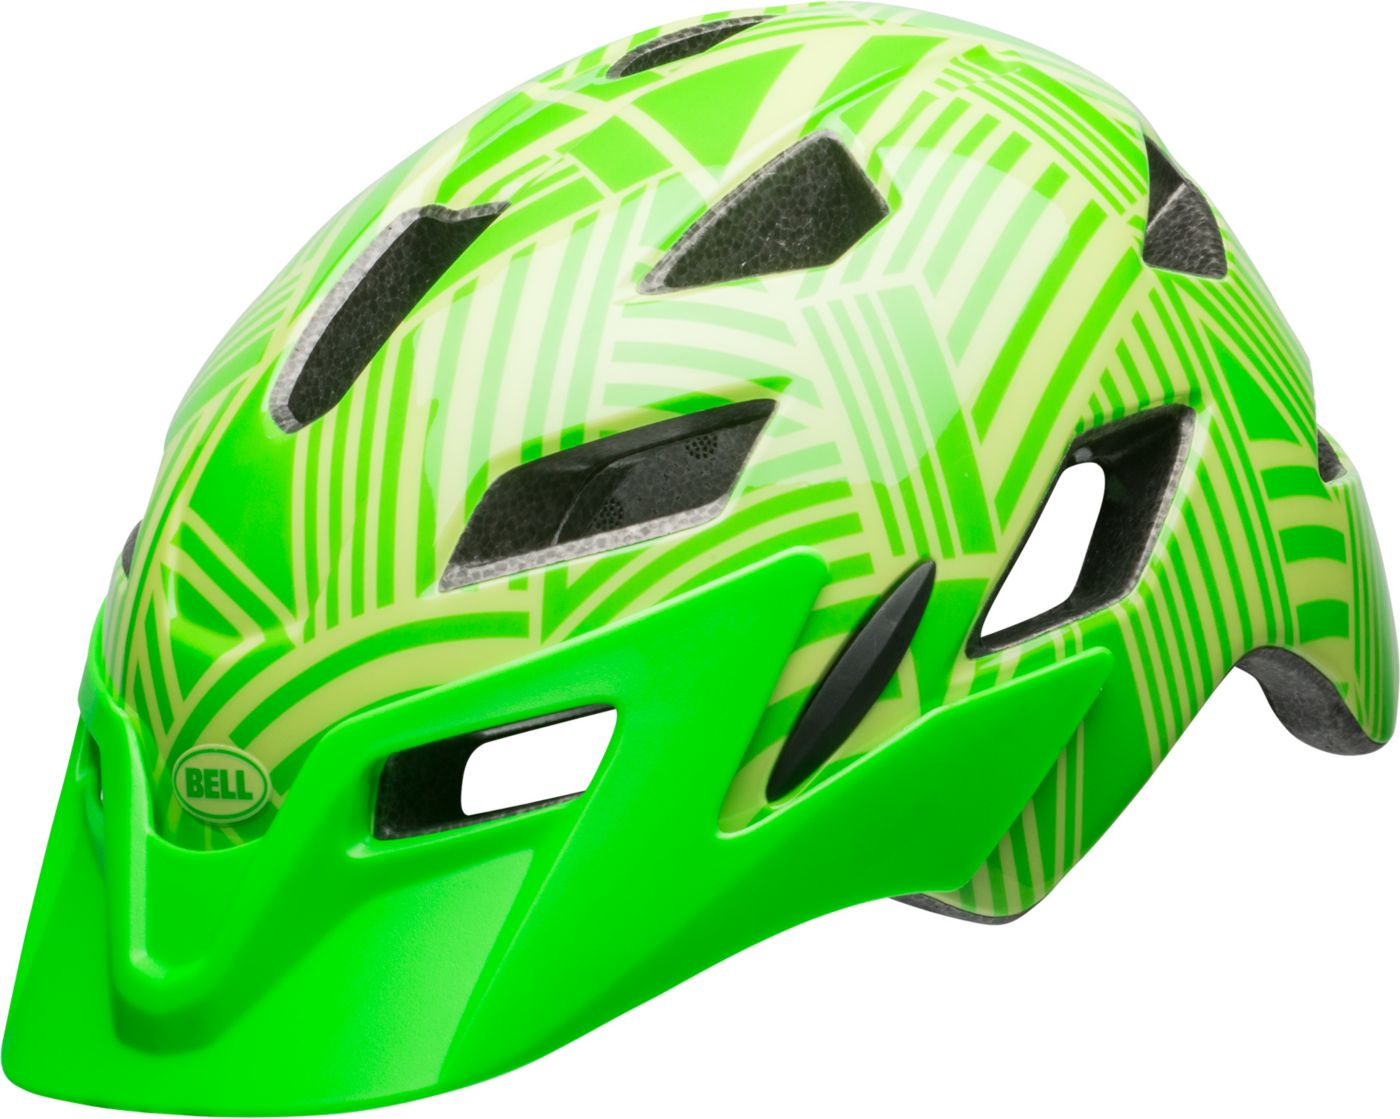 Bell Youth Sidetrack Bike Helmet | DICK'S Sporting Goods